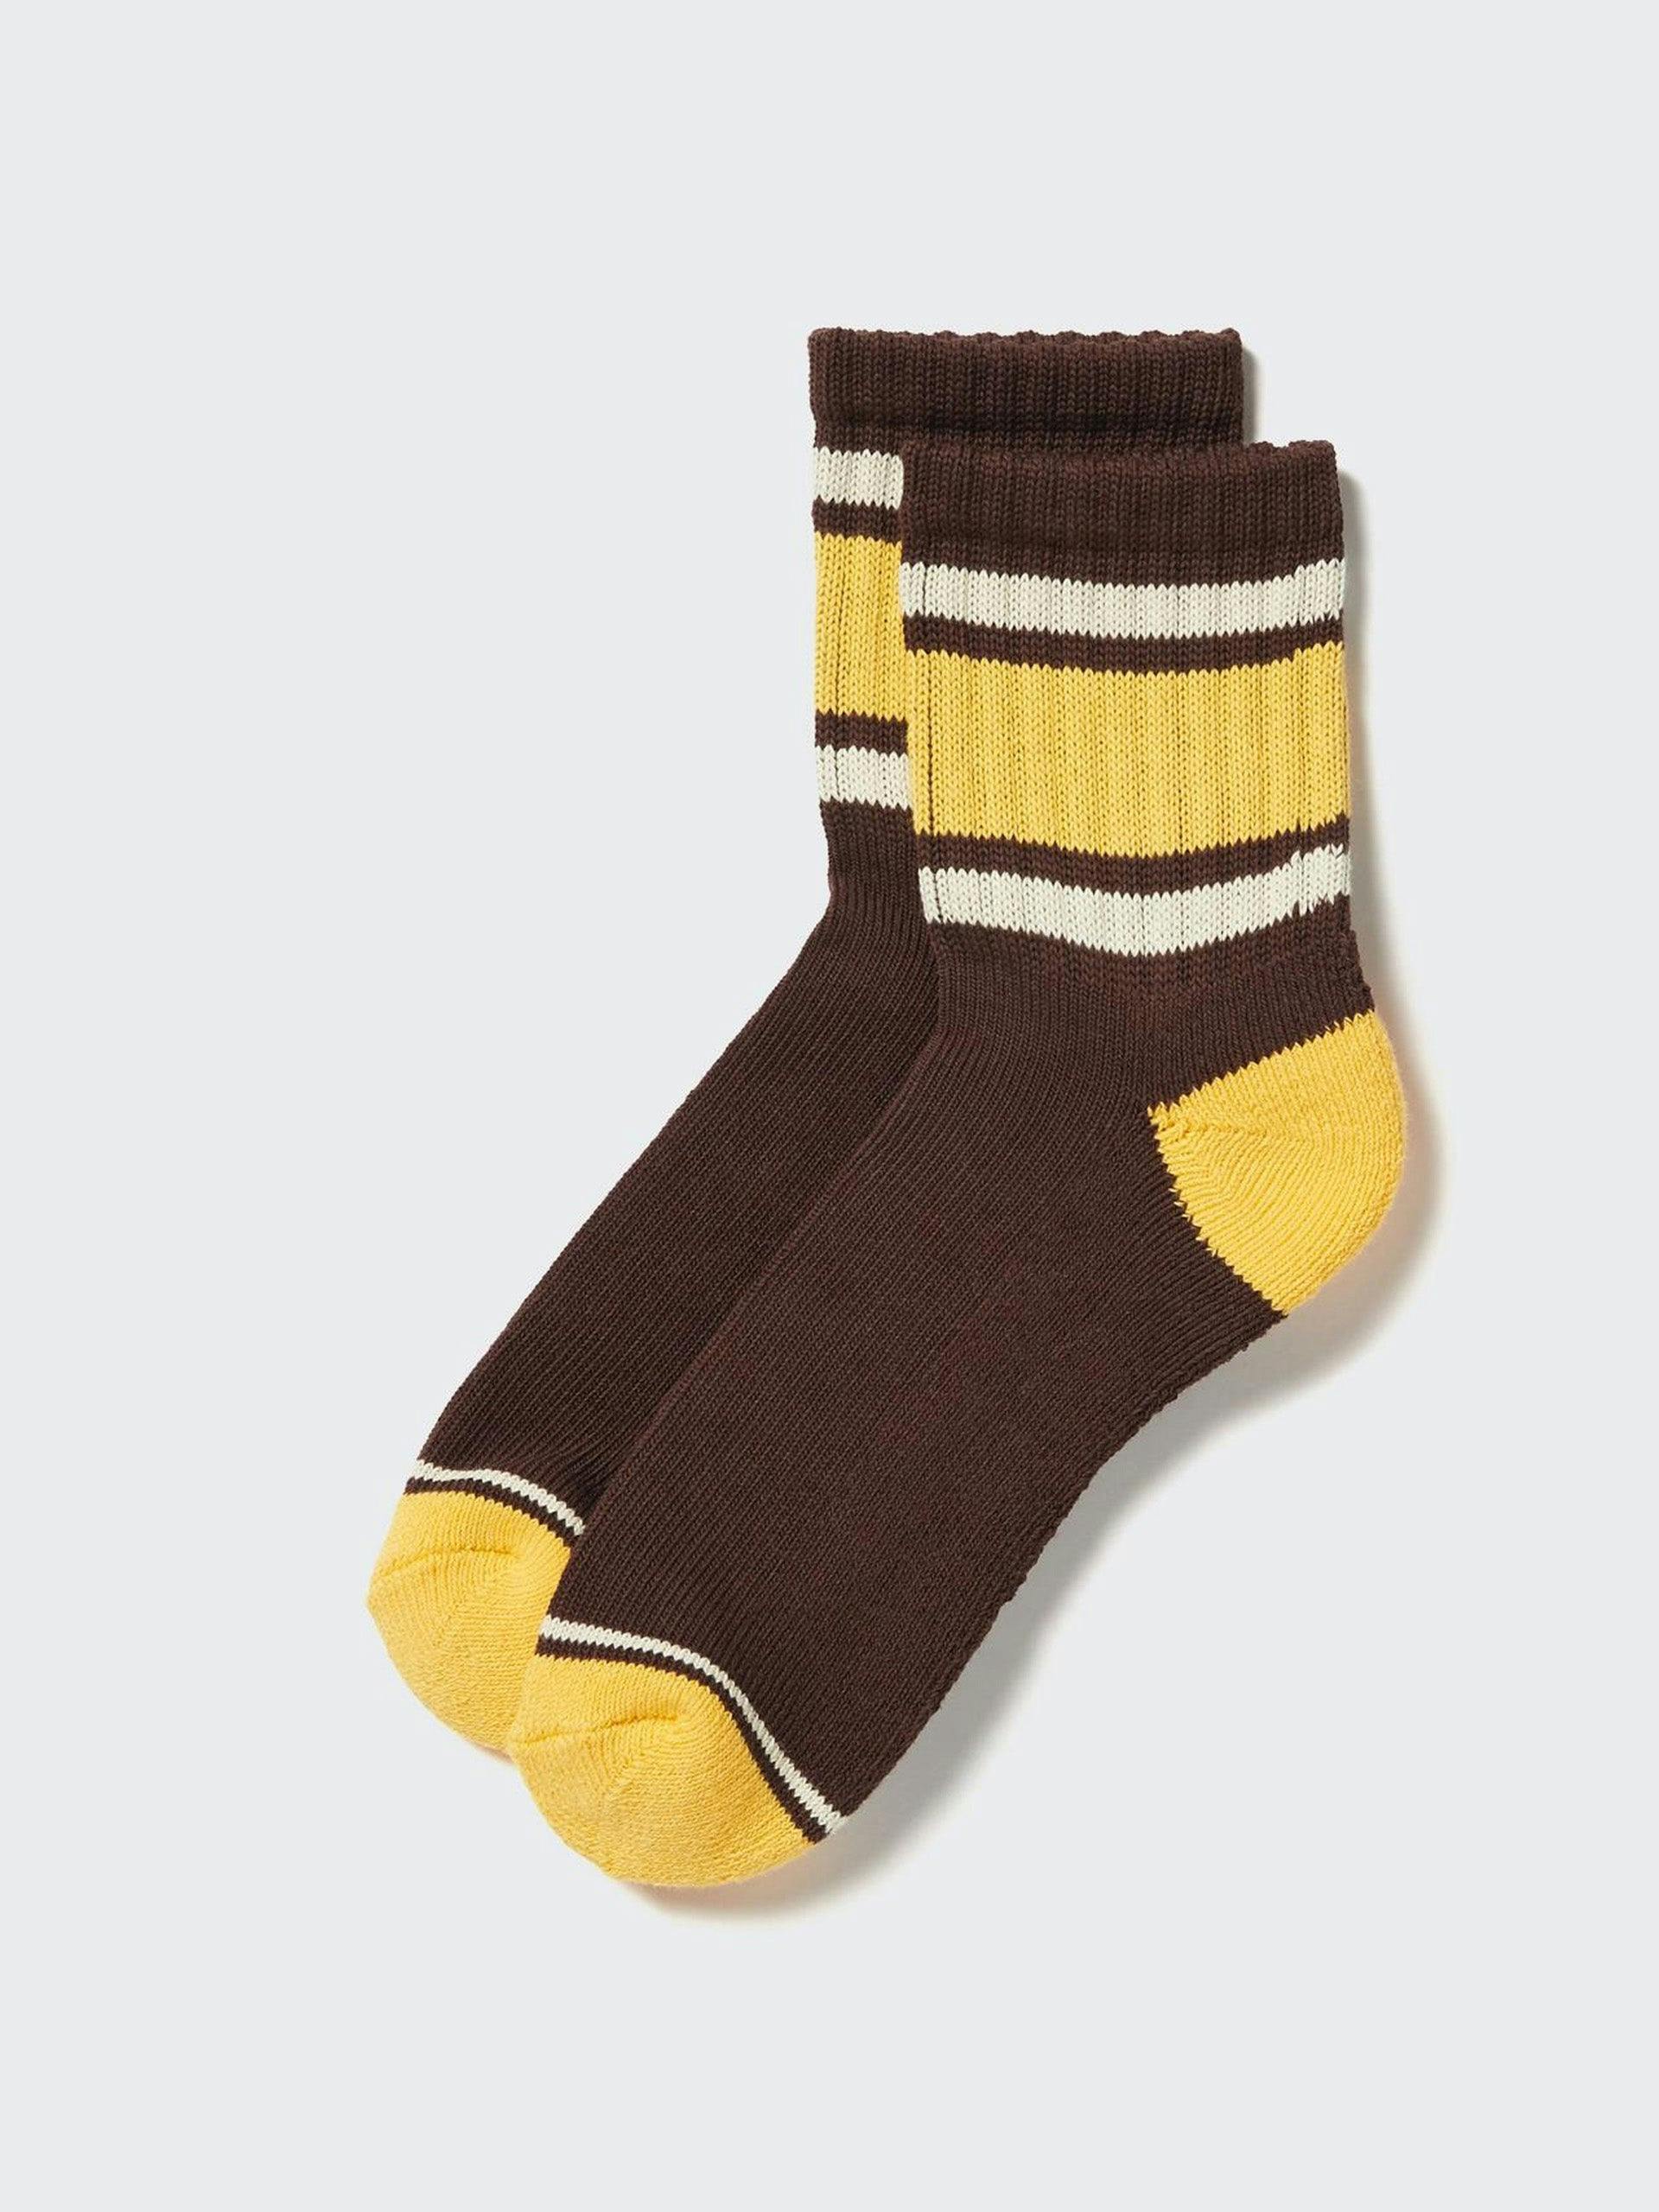 Brown and yellow stripe socks